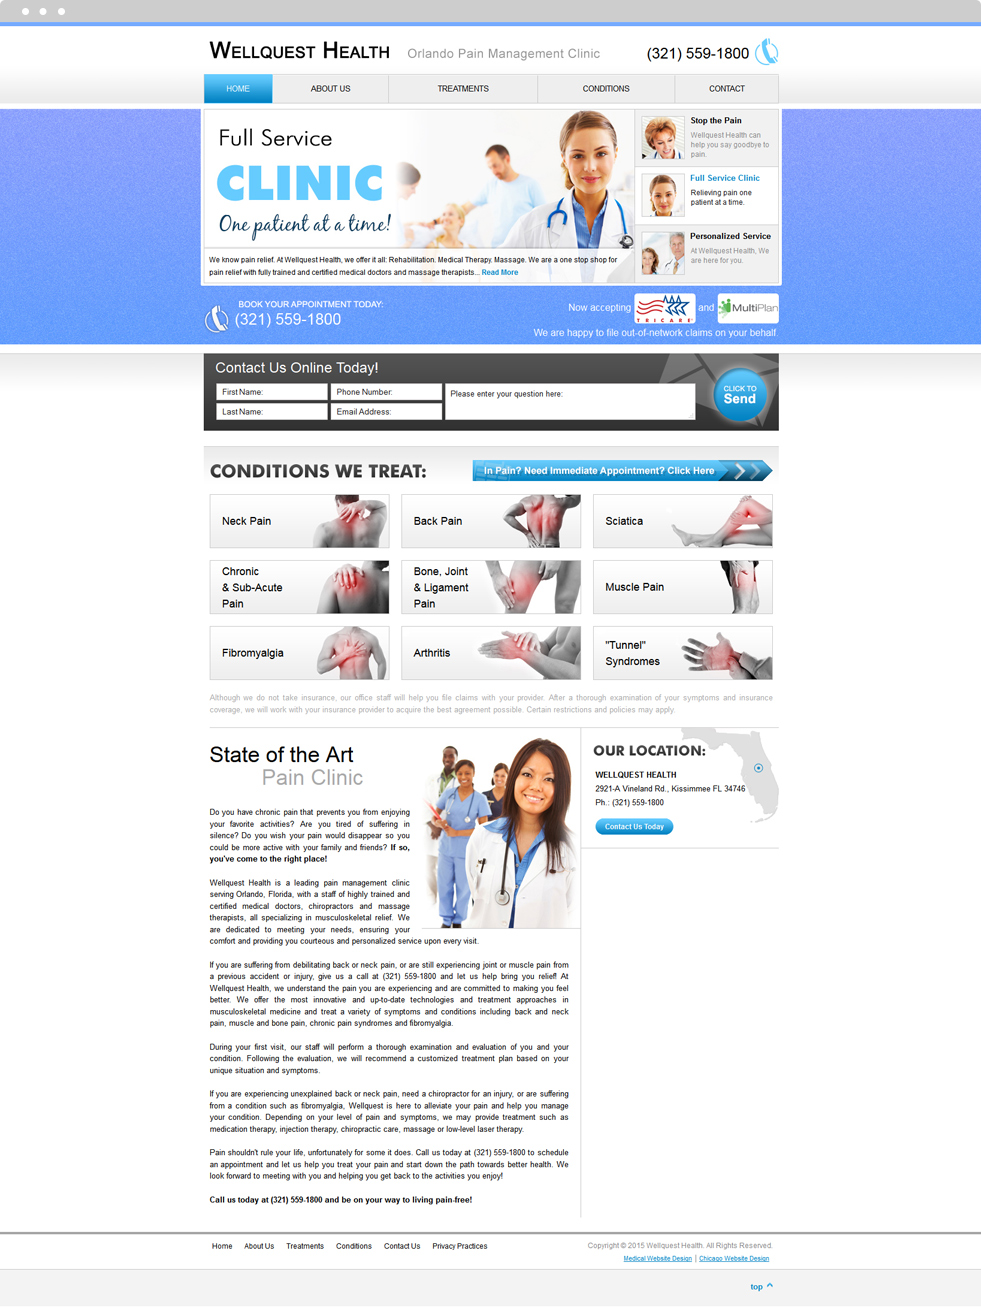 Pain Management Website Design - Wellquest Health - Homepage